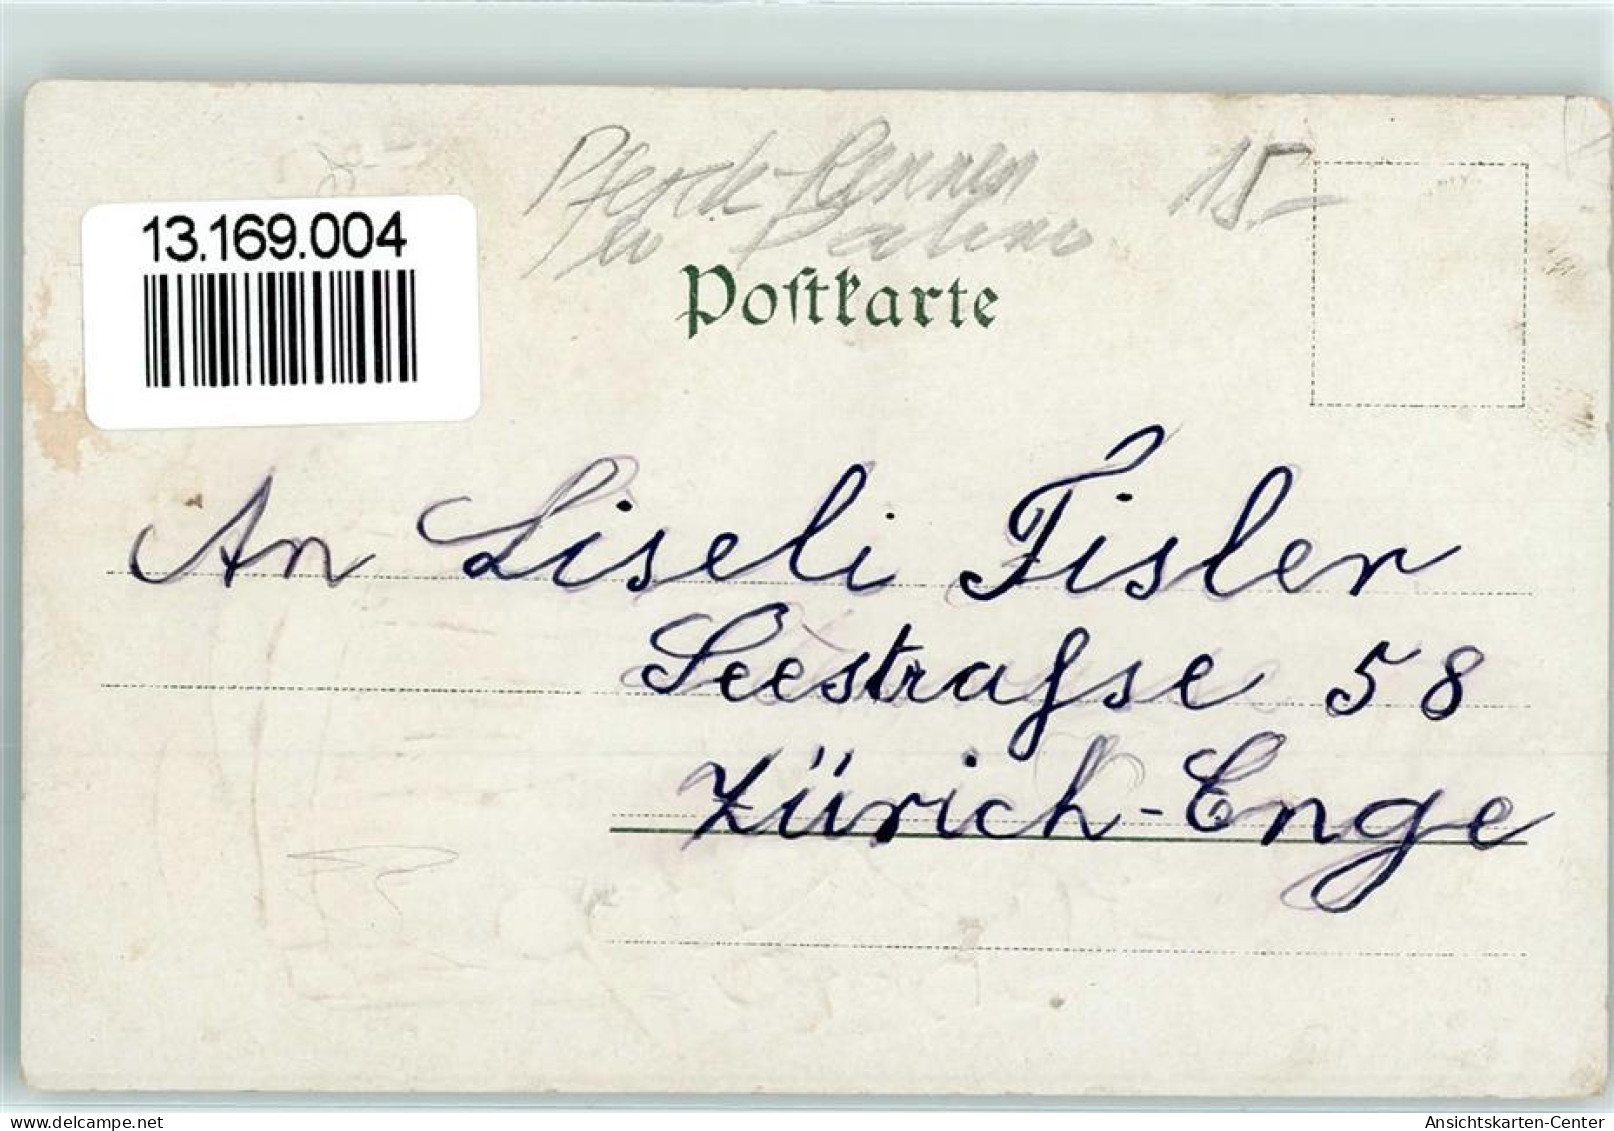 13169004 - Praegedruck Muenchner Kindl Als Puppen  Heliorcolorkarte  Zieher, Ottmar - Exhibitions